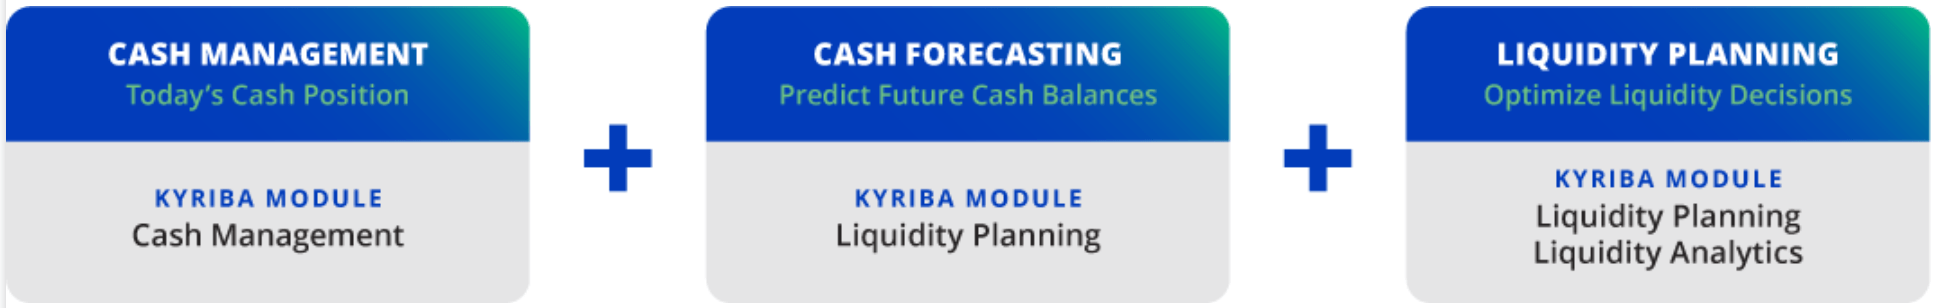 Evolution of cash forecasting to liquidity planning